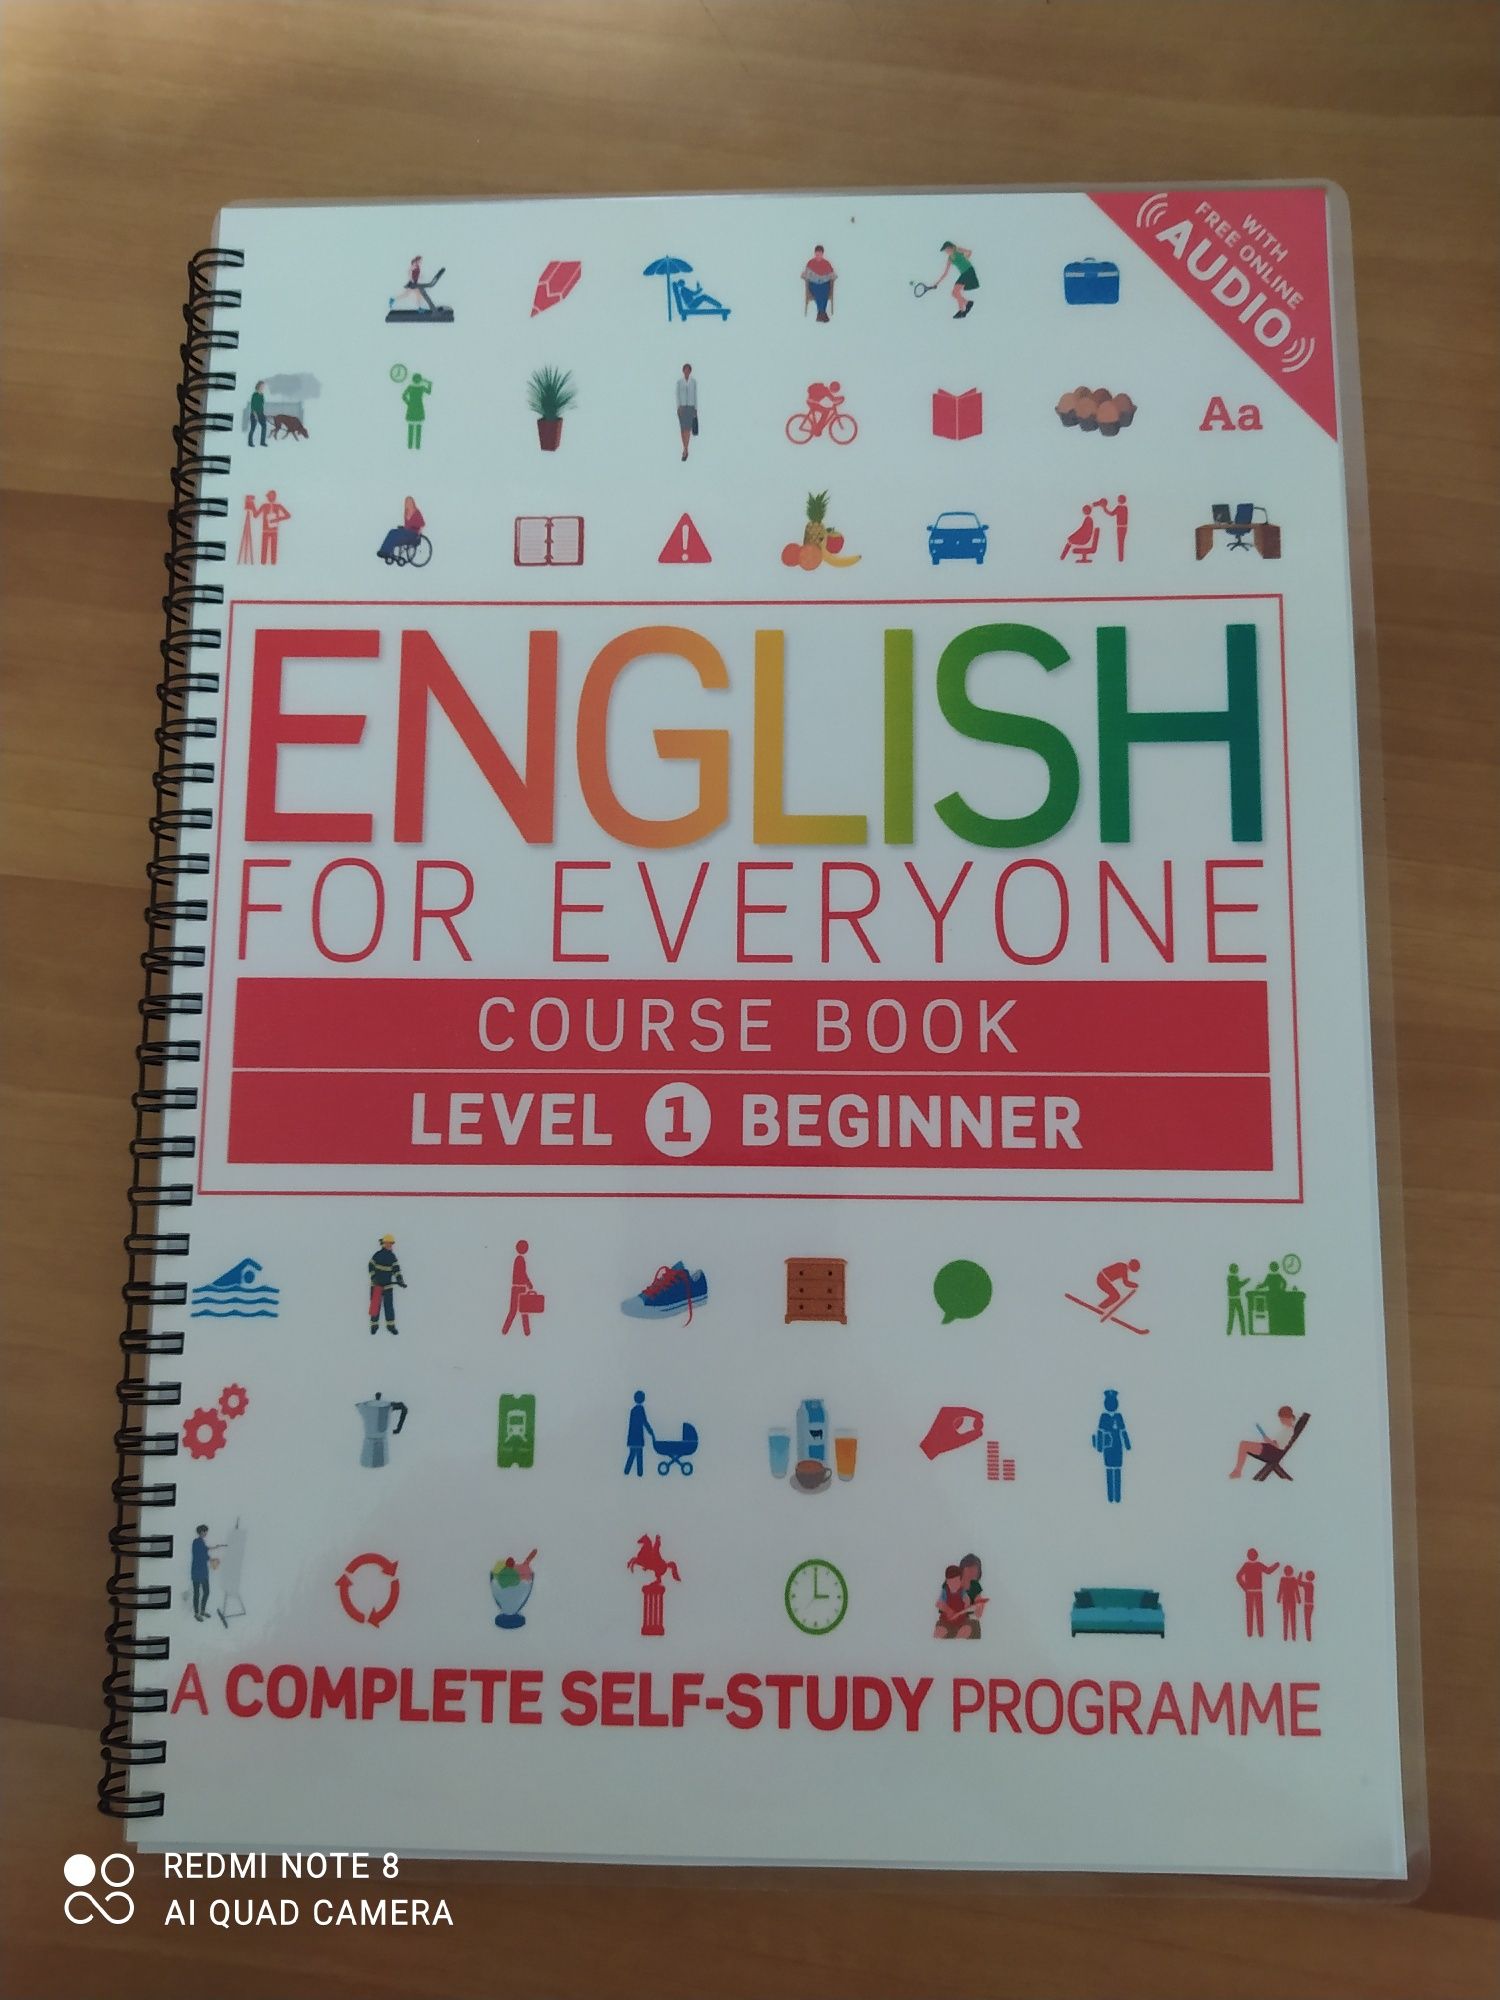 English for everyone 1,2,3,4.